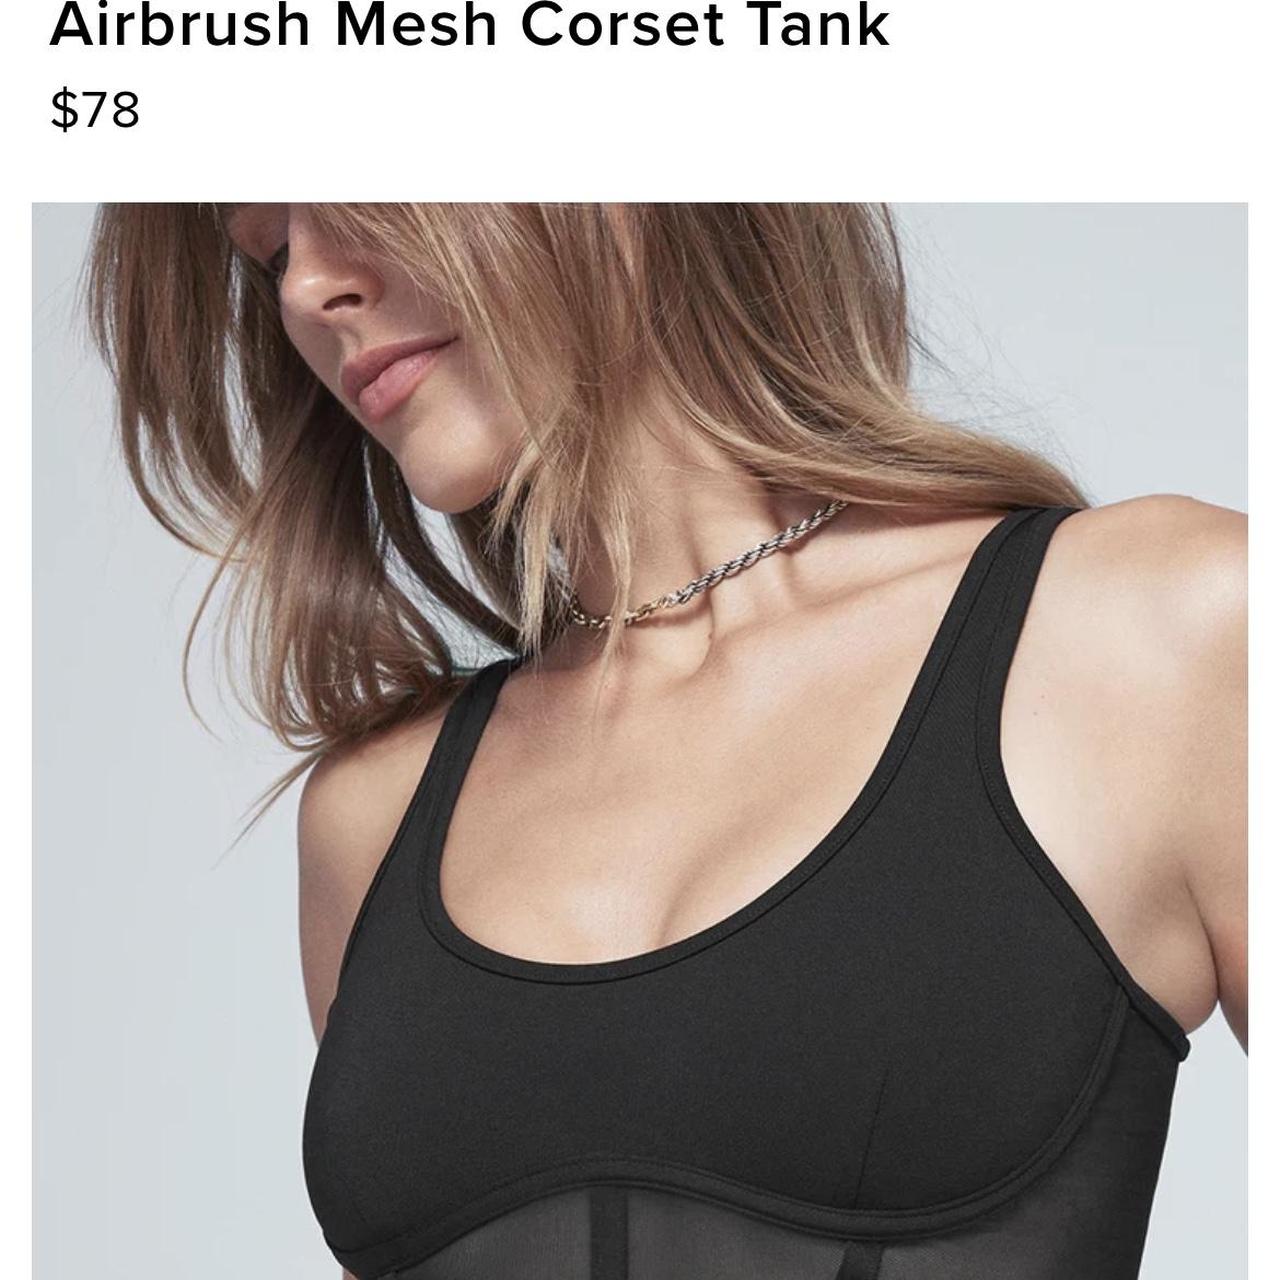 Airbrush Mesh Corset Tank by Alo Yoga in black size - Depop